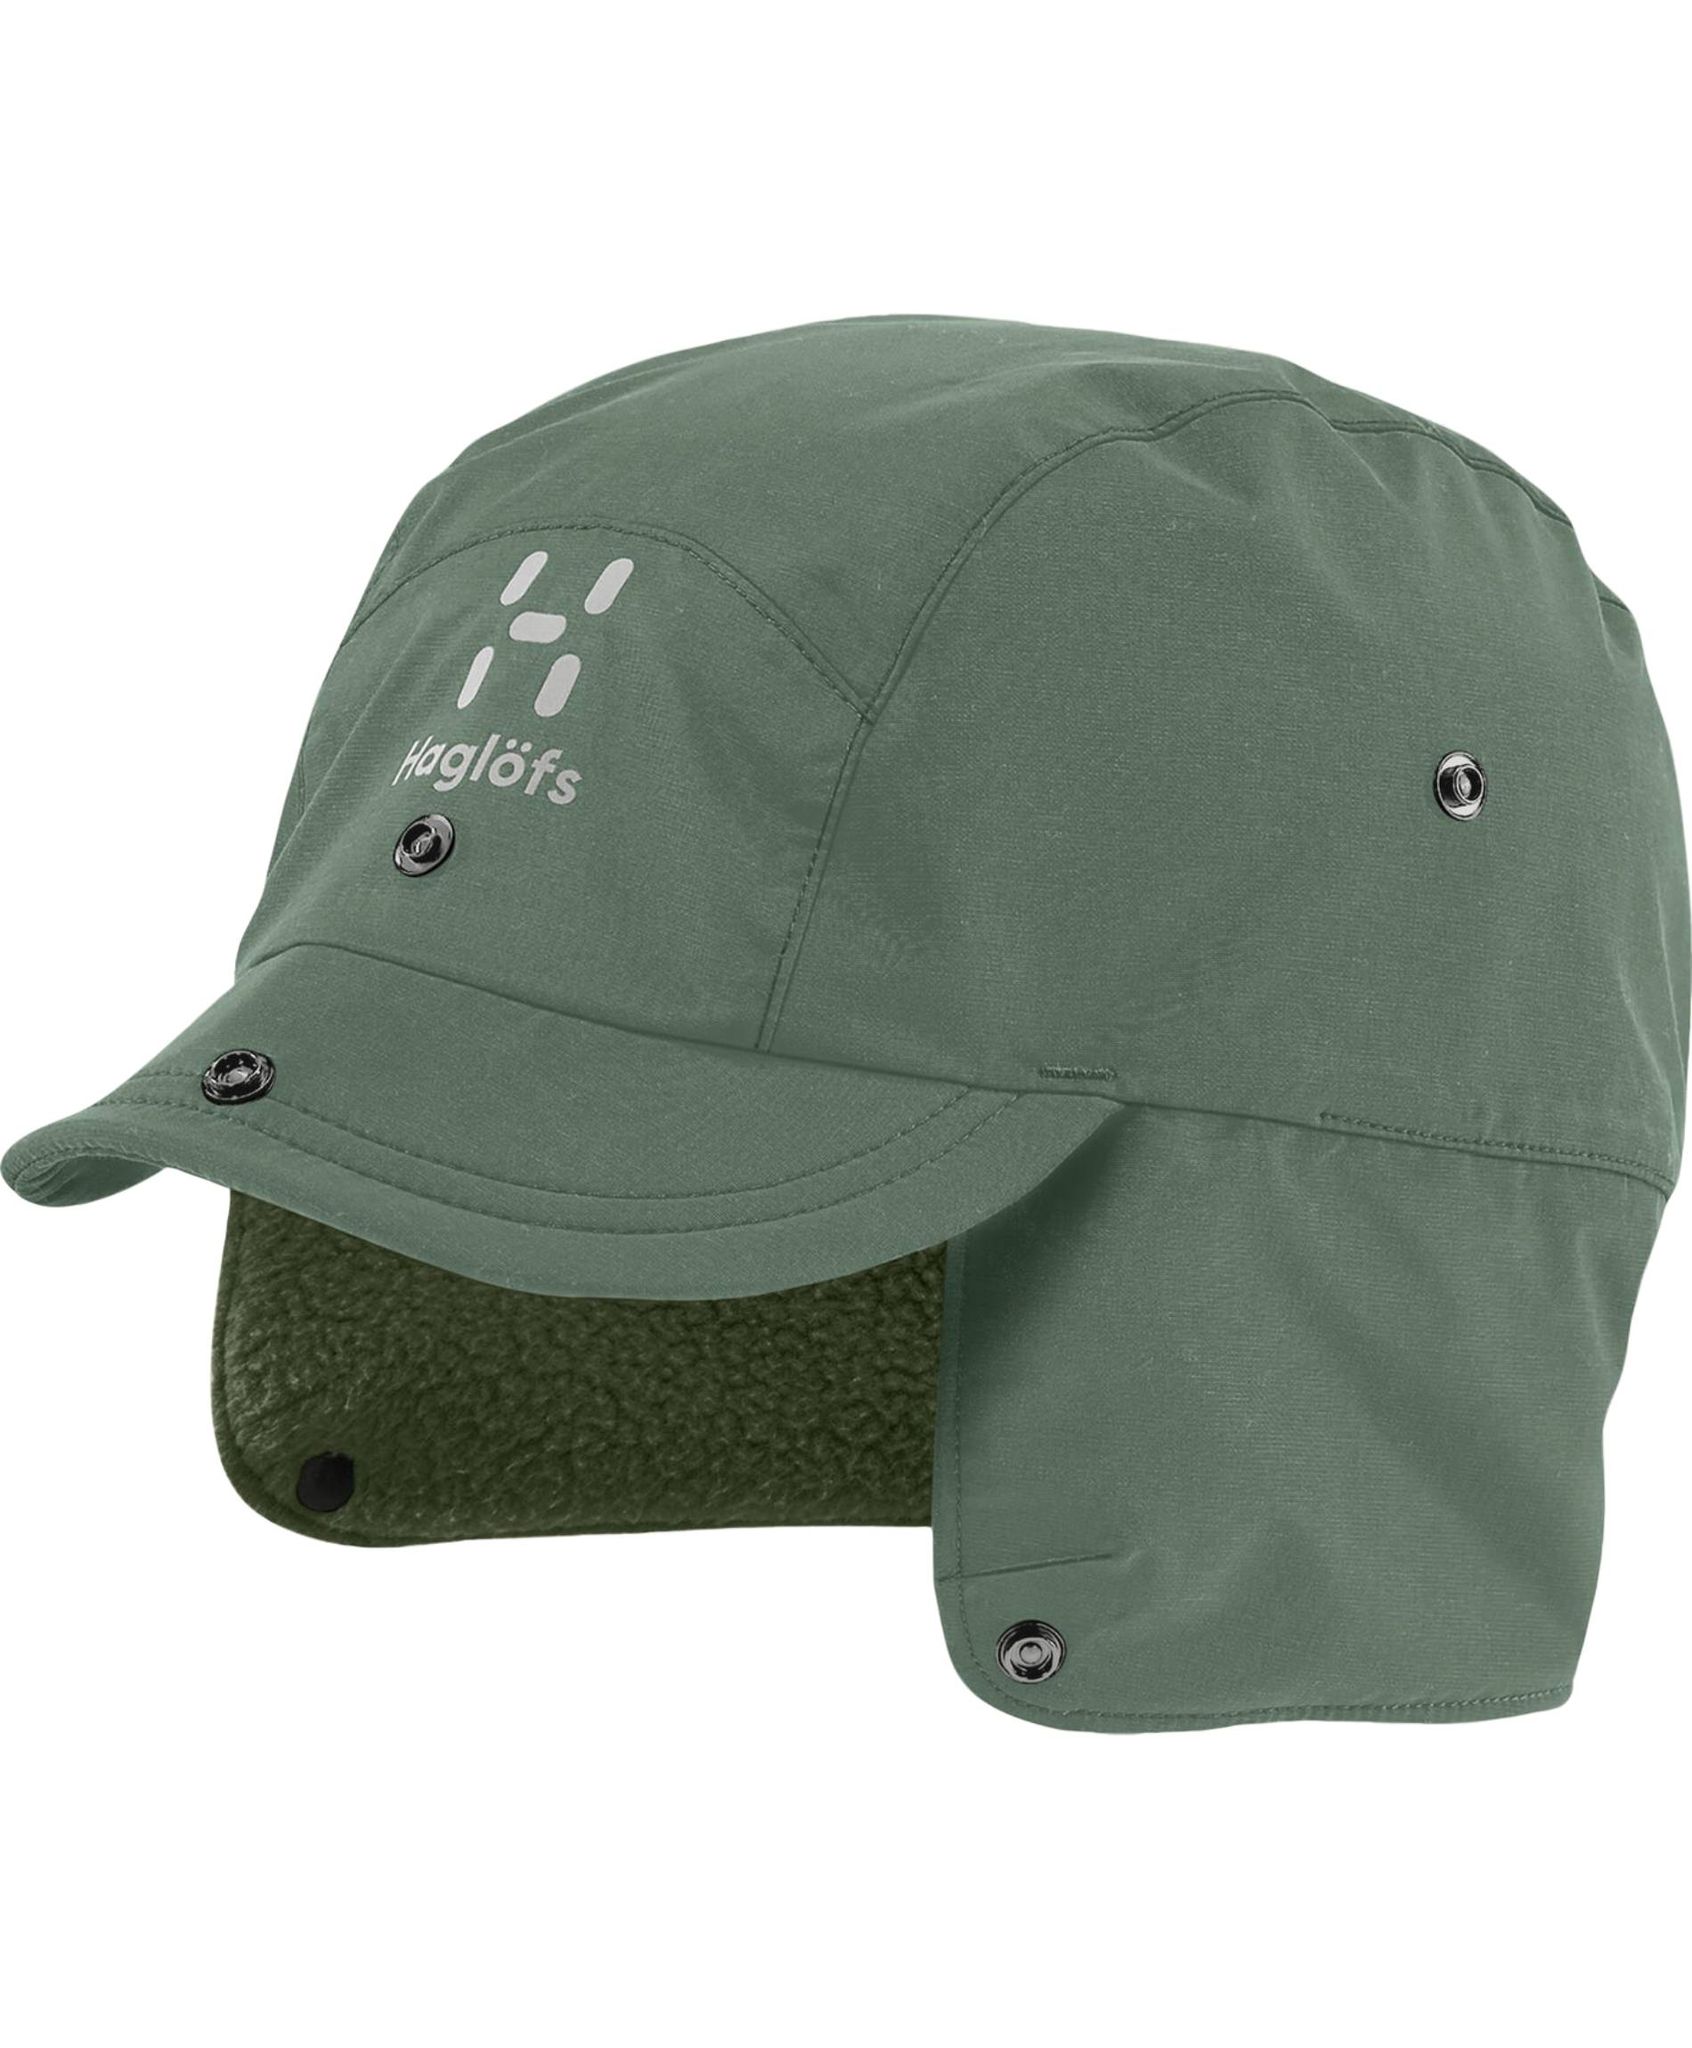 HAGLÖFS MOUNTAIN CAP, Fjell Green/Seaweed Green, S